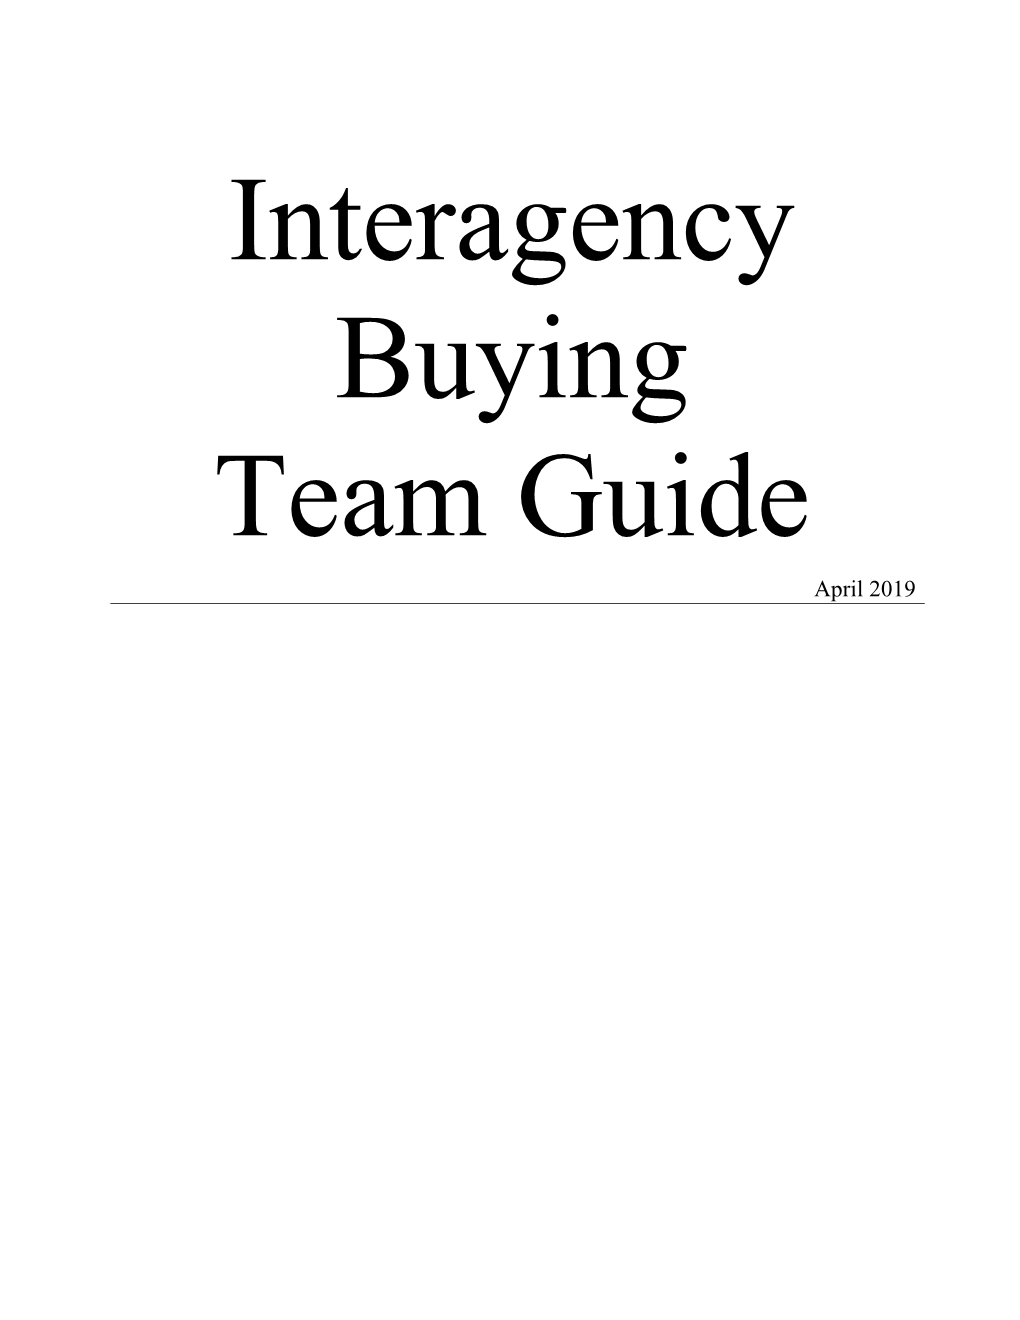 National Interagency Buying Team Guide